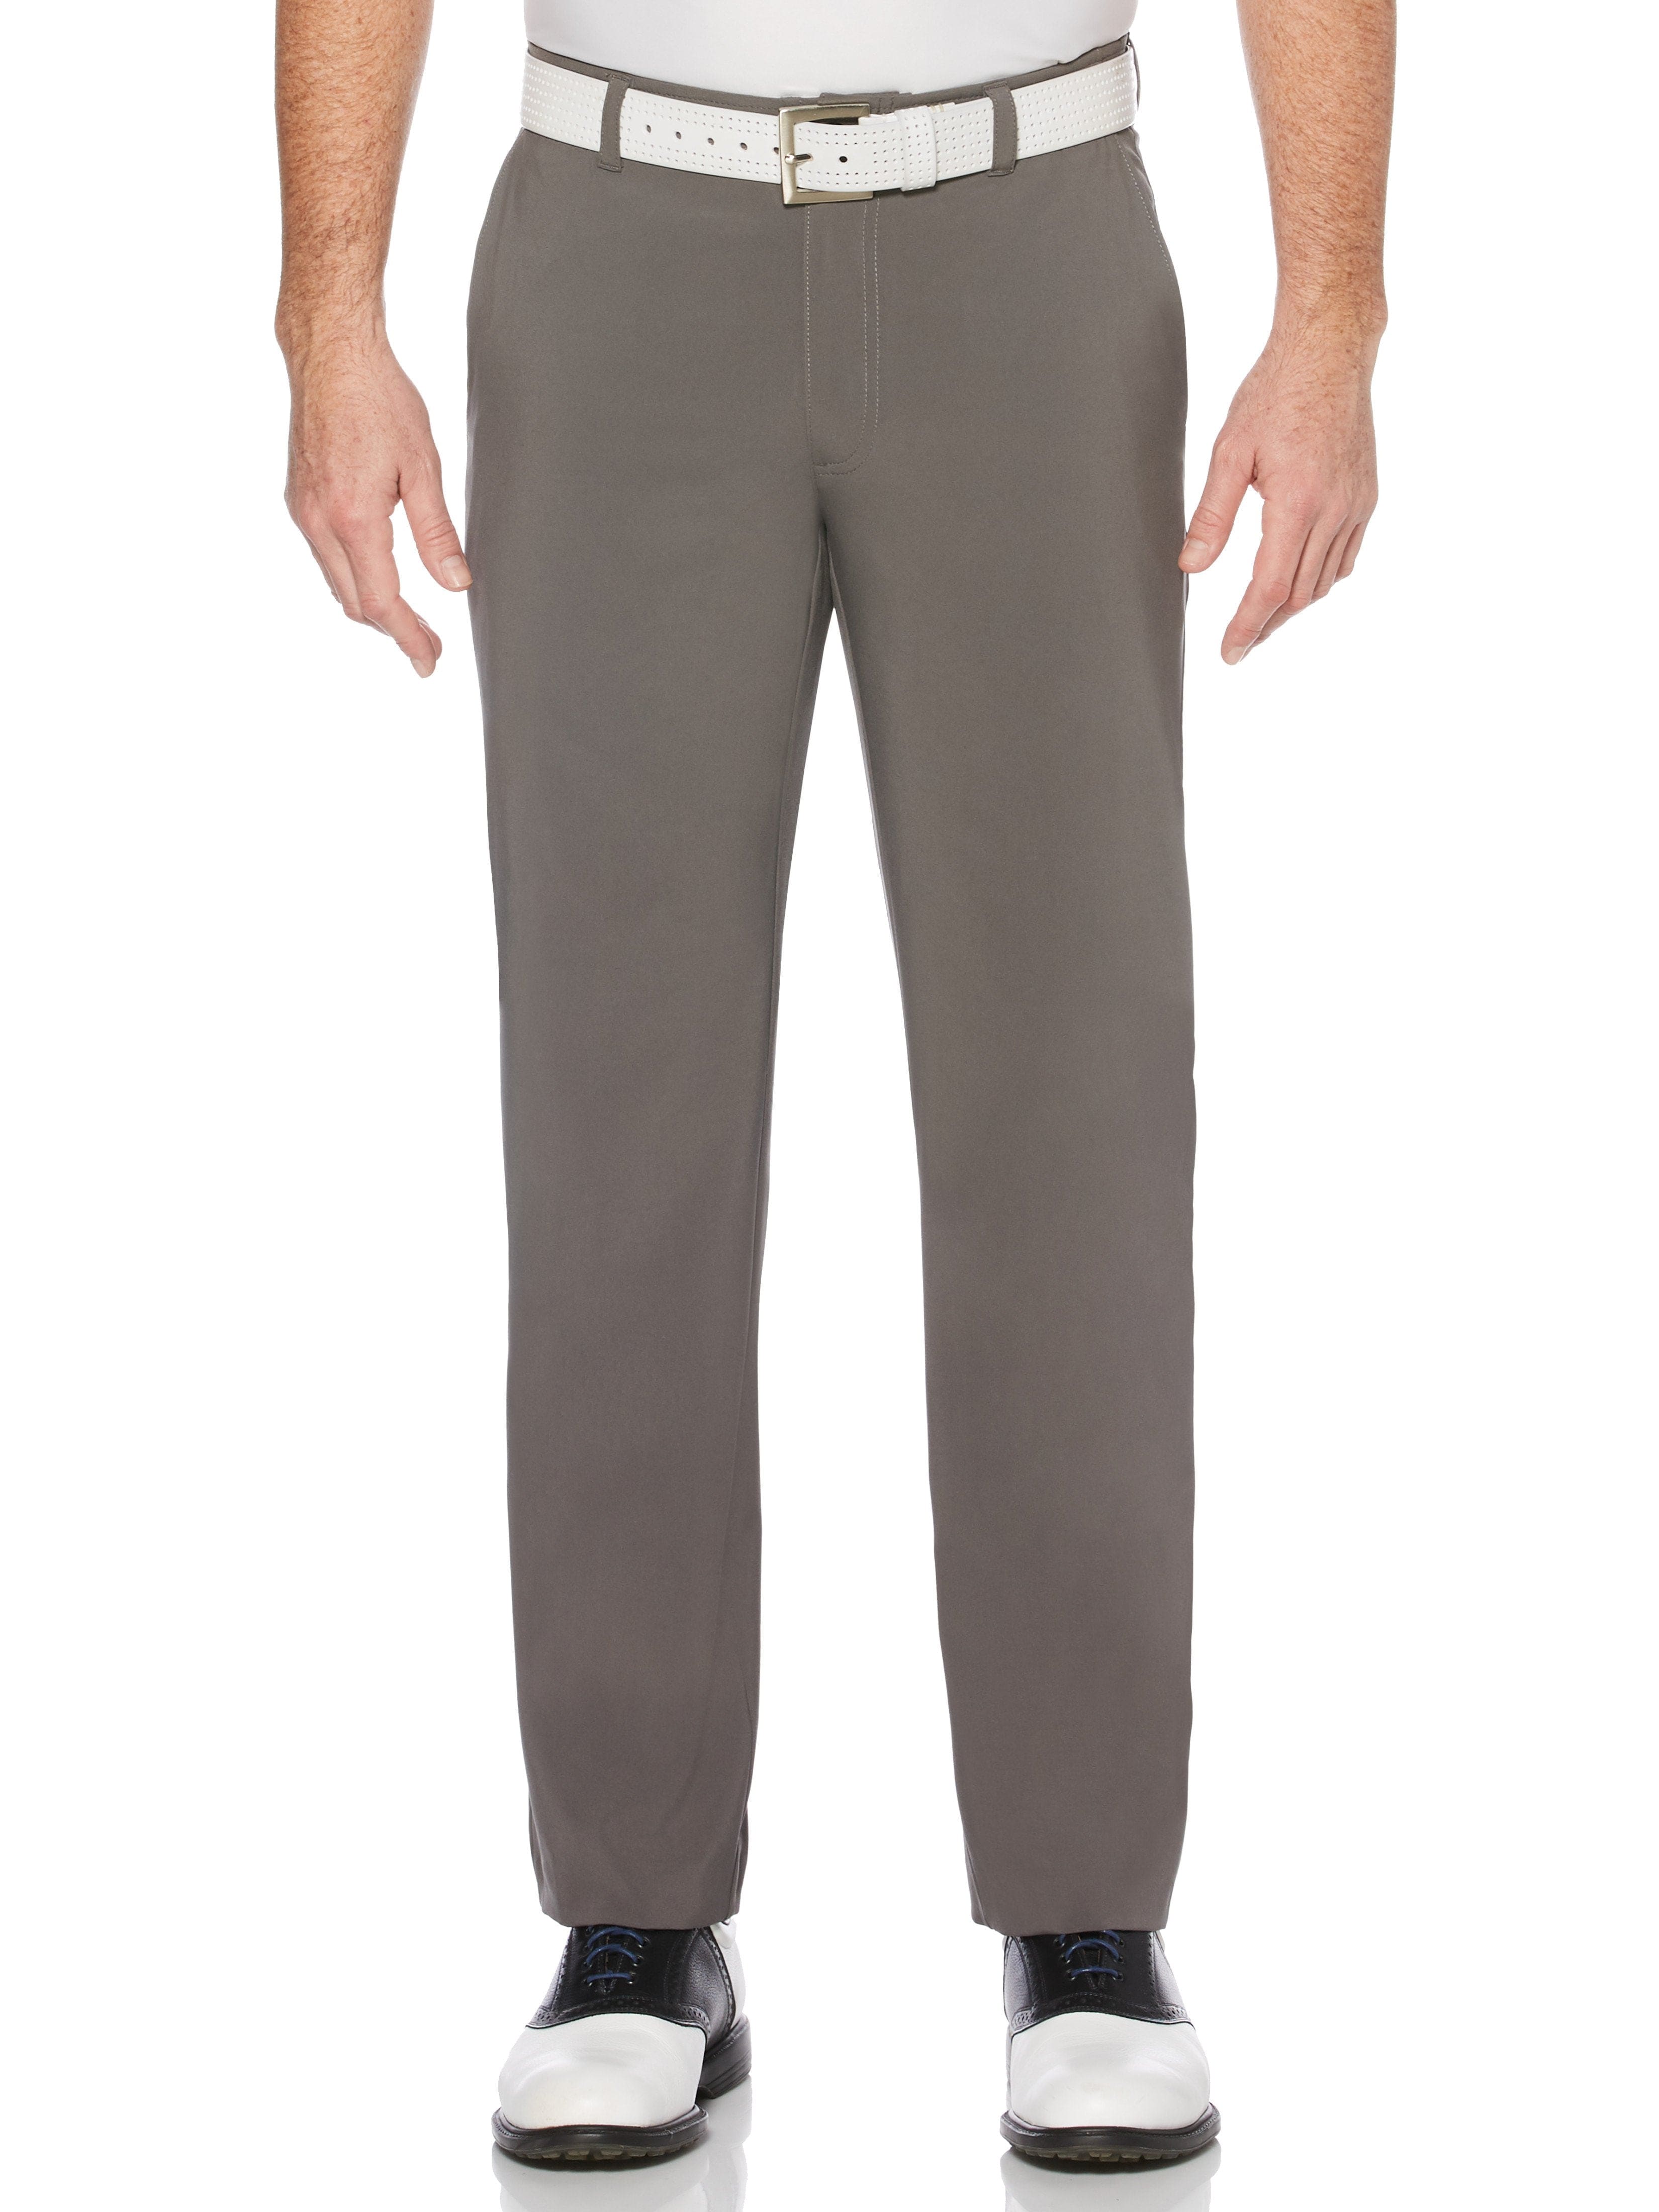 Jack Nicklaus Mens Flat Front Active Flex Pants, Size 29 x 30, Iron Gate Gray, Polyester/Elastane | Golf Apparel Shop